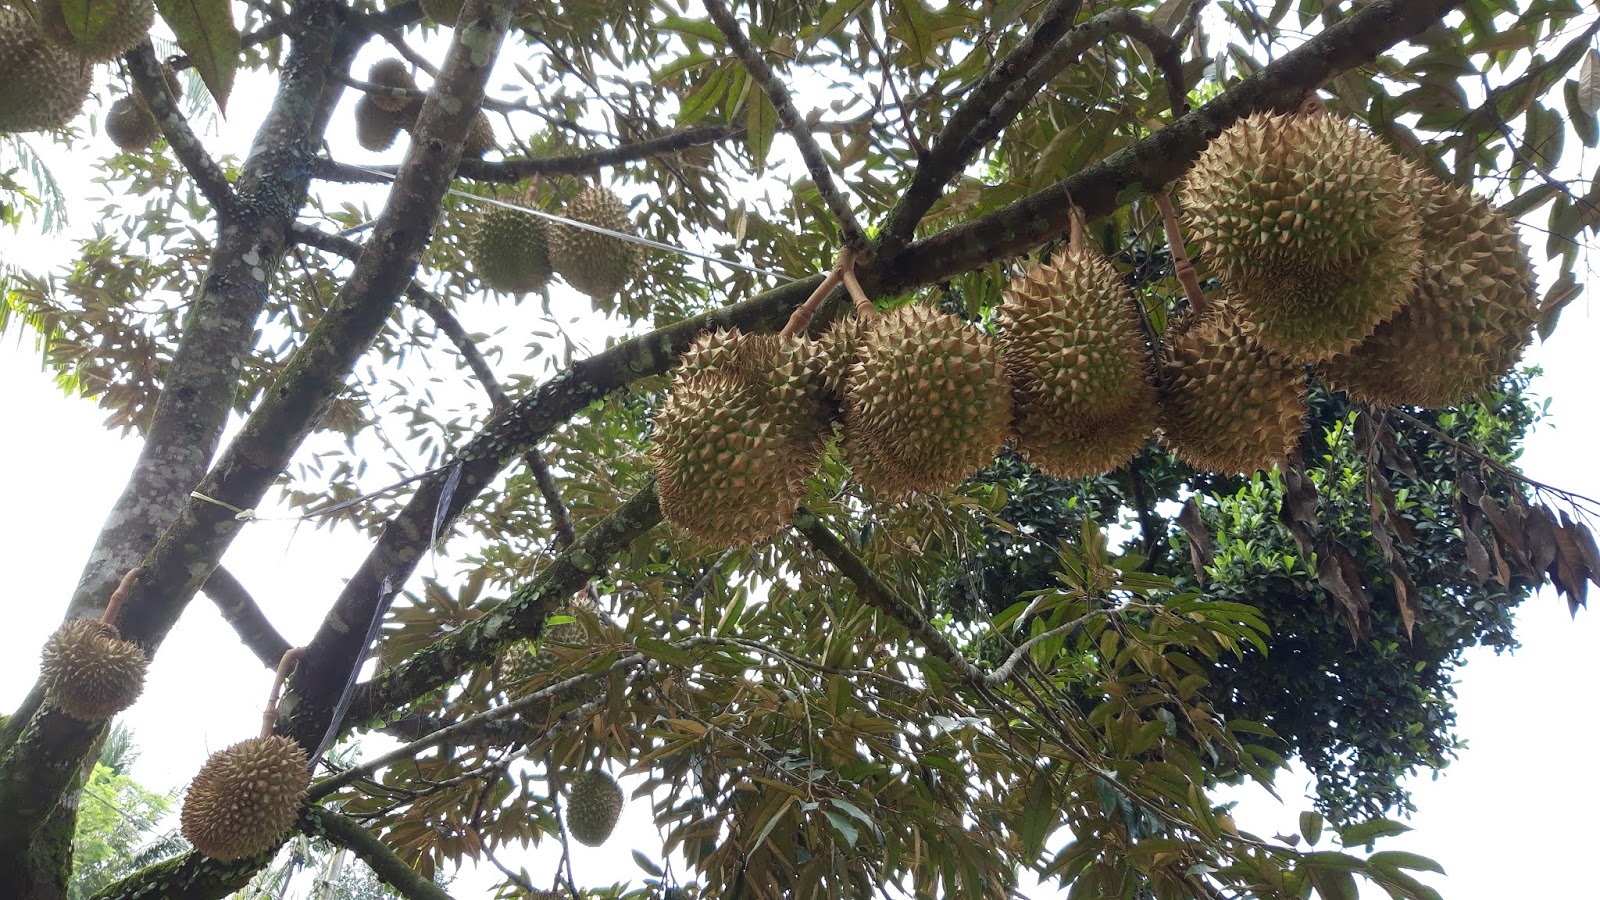 Wisata Kebun Durian Candimulyo SENTRA KEBUN DURIAN